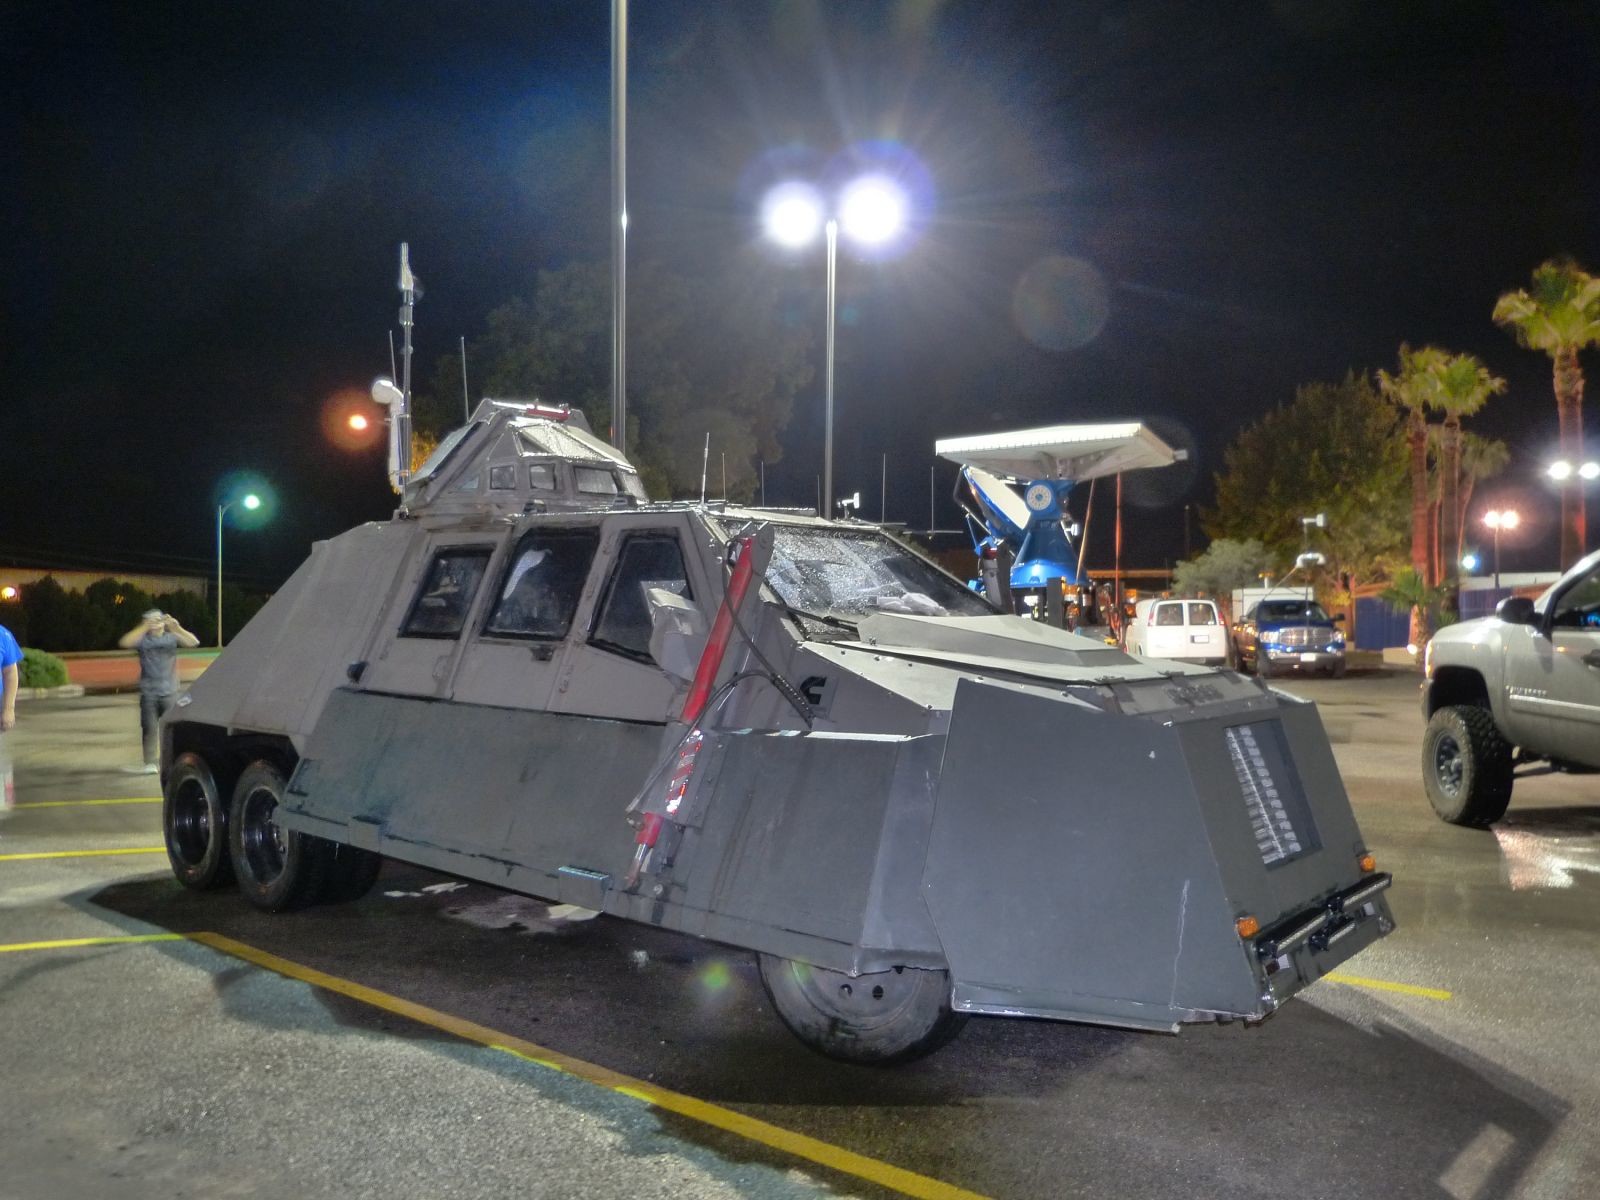 The TIV (Tornado Intercept Vehicle), Carlsbad, NM